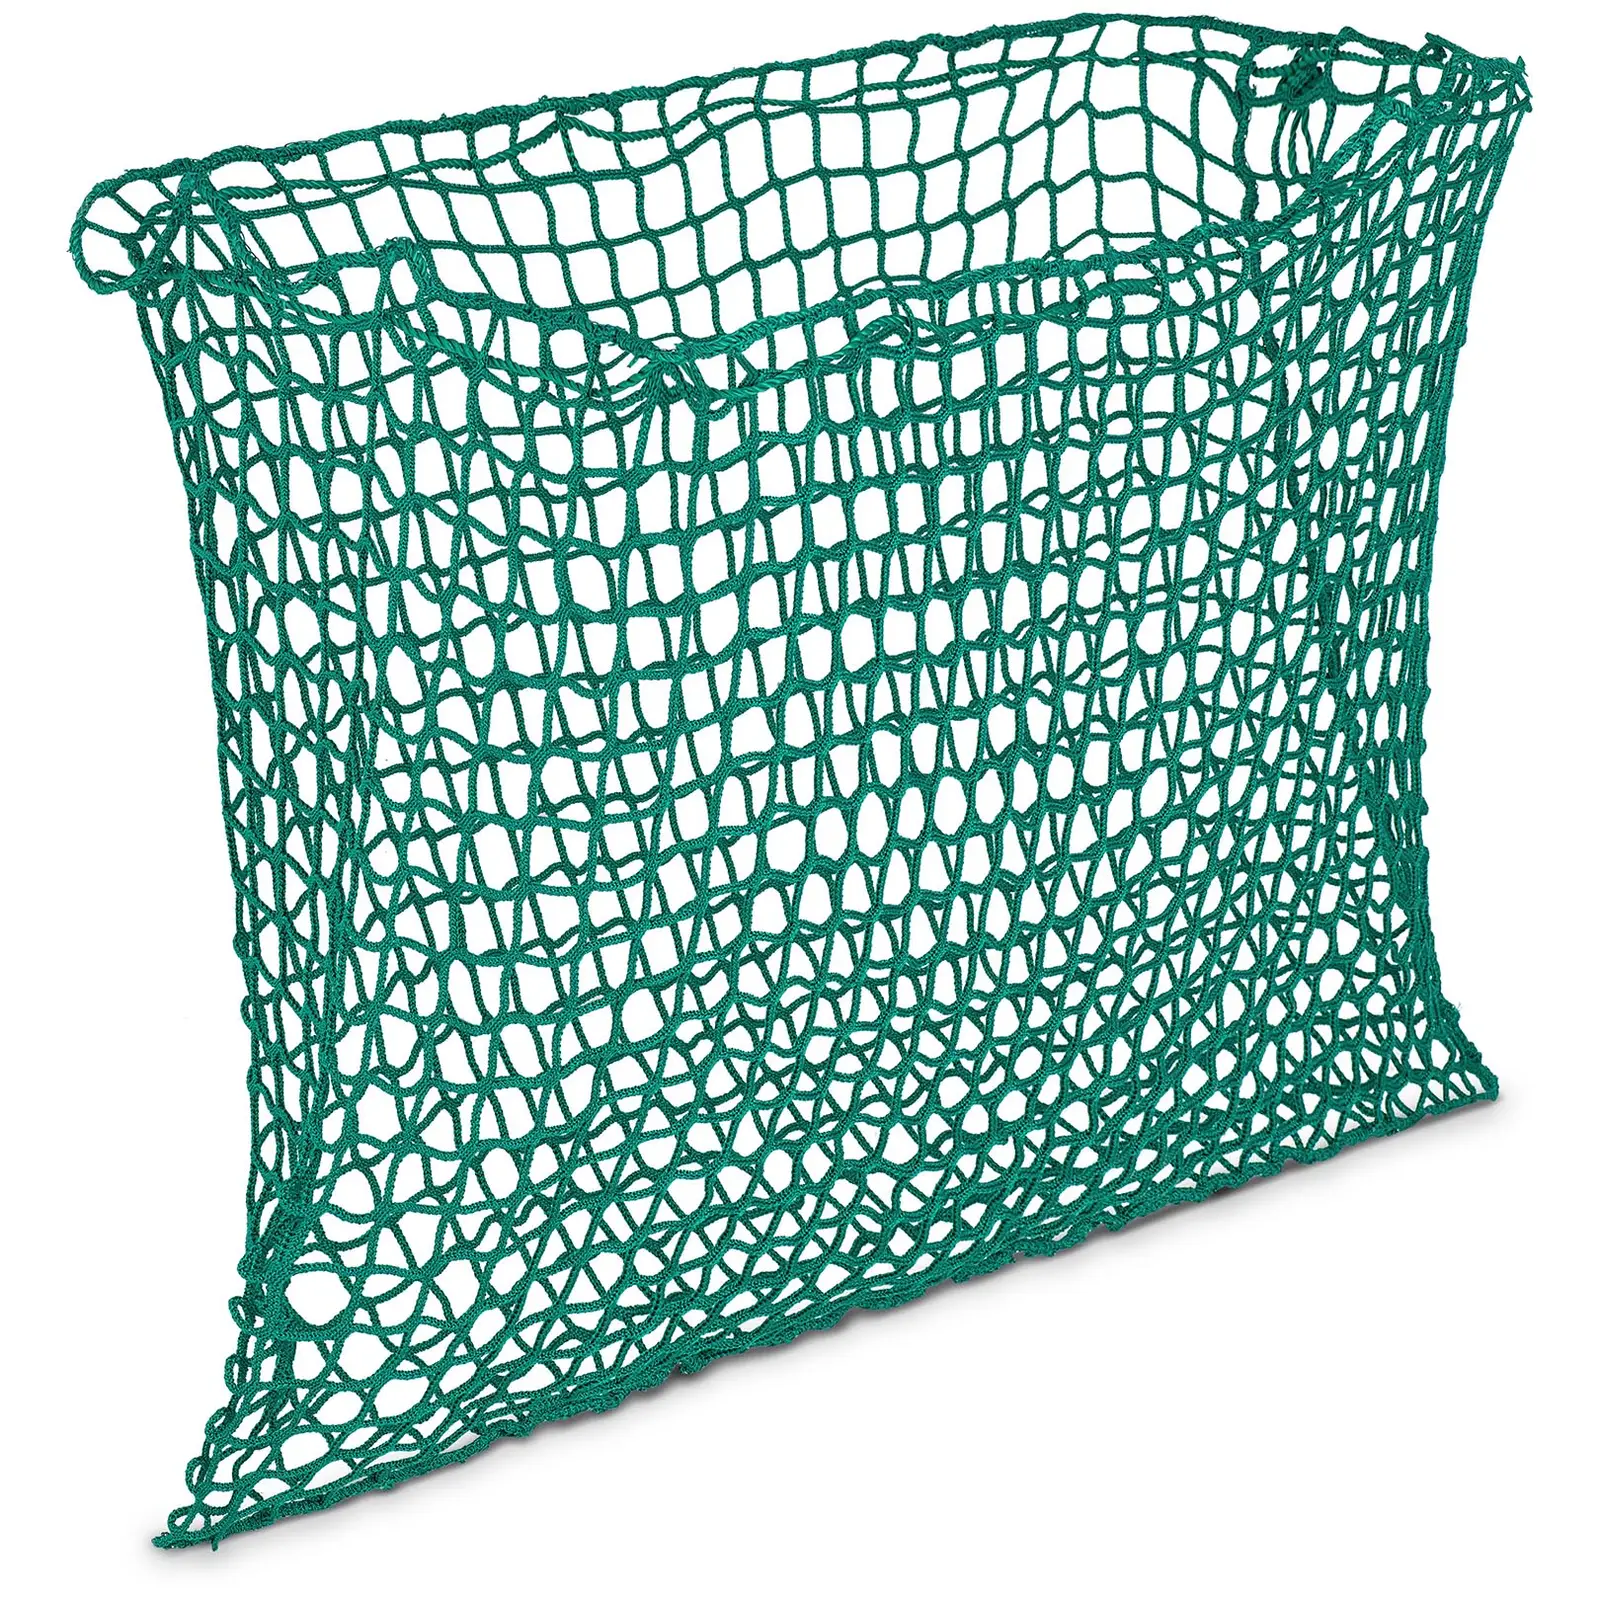 Hay Net - 1,500 x 900 mm - mesh size: 45 x 45 mm - Black